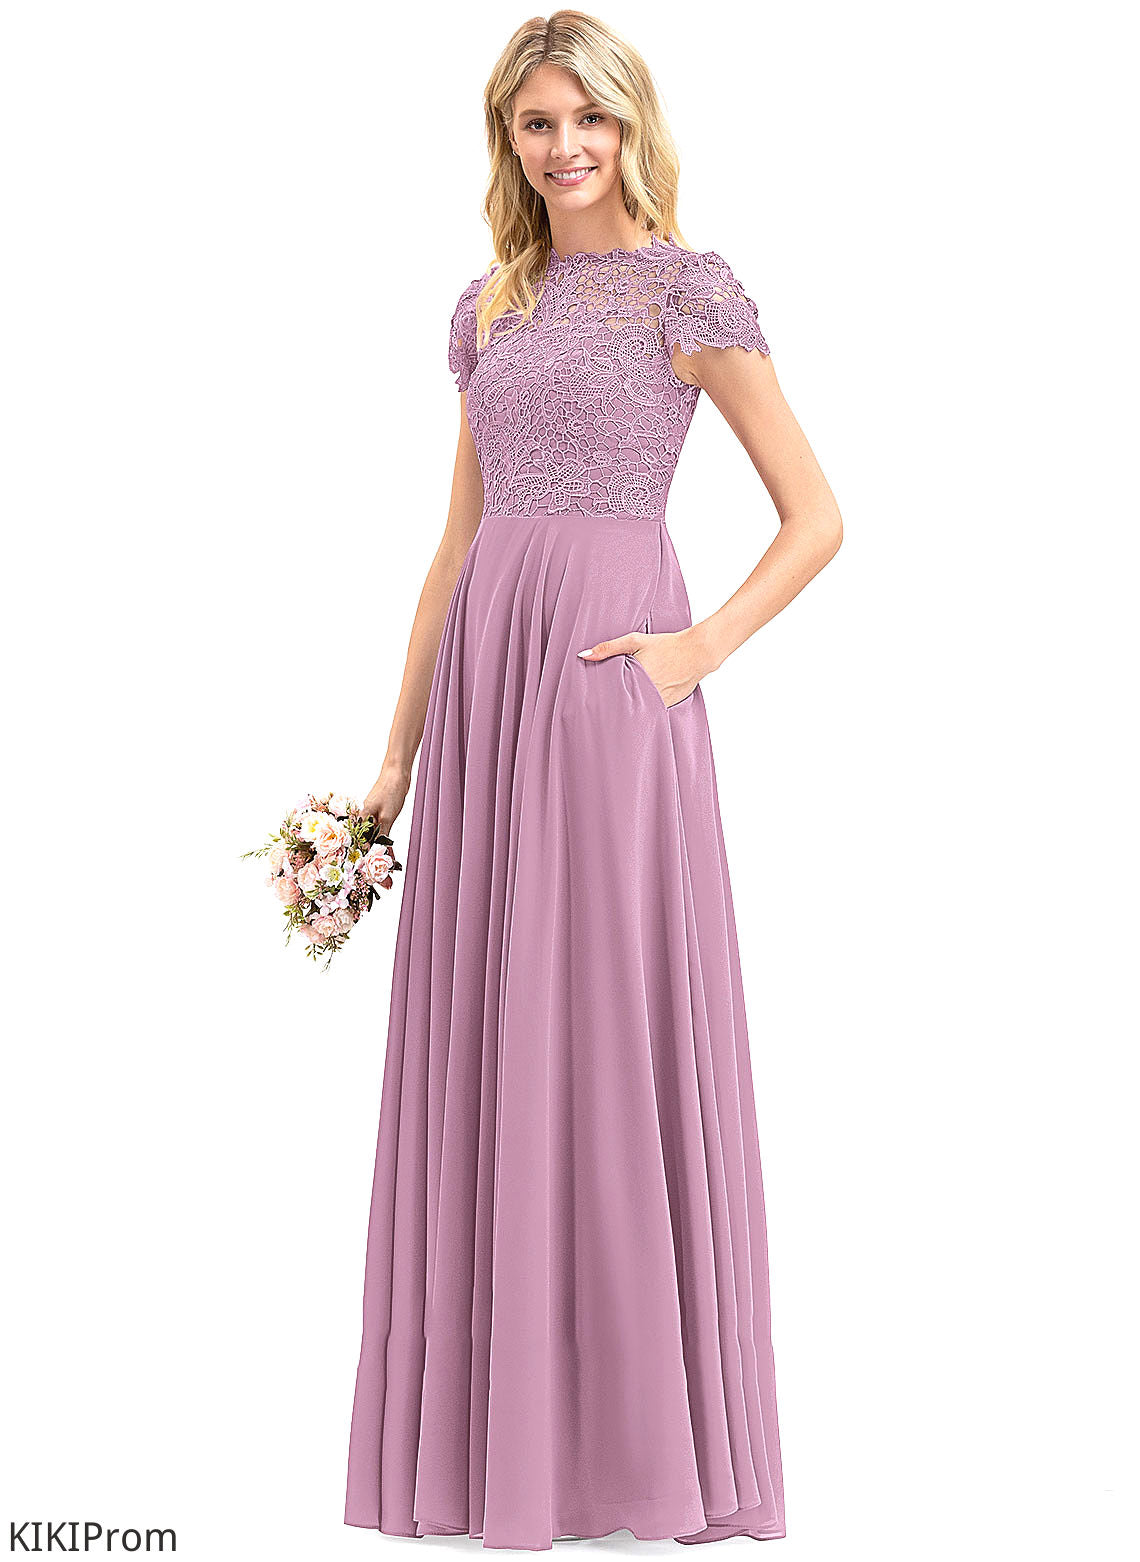 Fabric ScoopNeck Floor-Length Pockets A-Line Silhouette Neckline Length Embellishment Jillian Sleeveless Natural Waist Bridesmaid Dresses